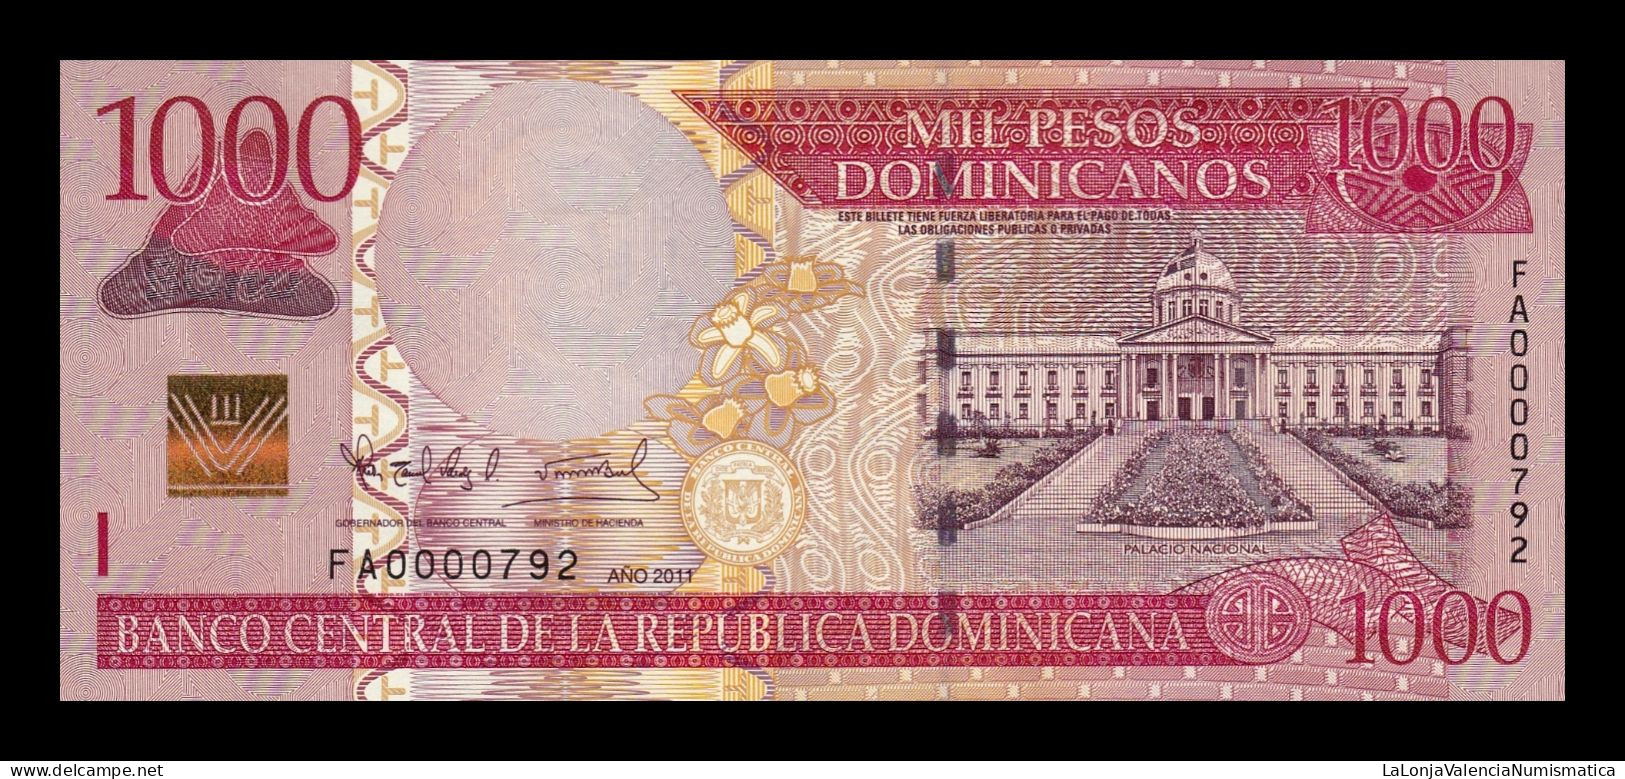 República Dominicana 1000 Pesos Dominicanos 2011 Pick 187a Low Serial 792 Sc Unc - Dominicaine